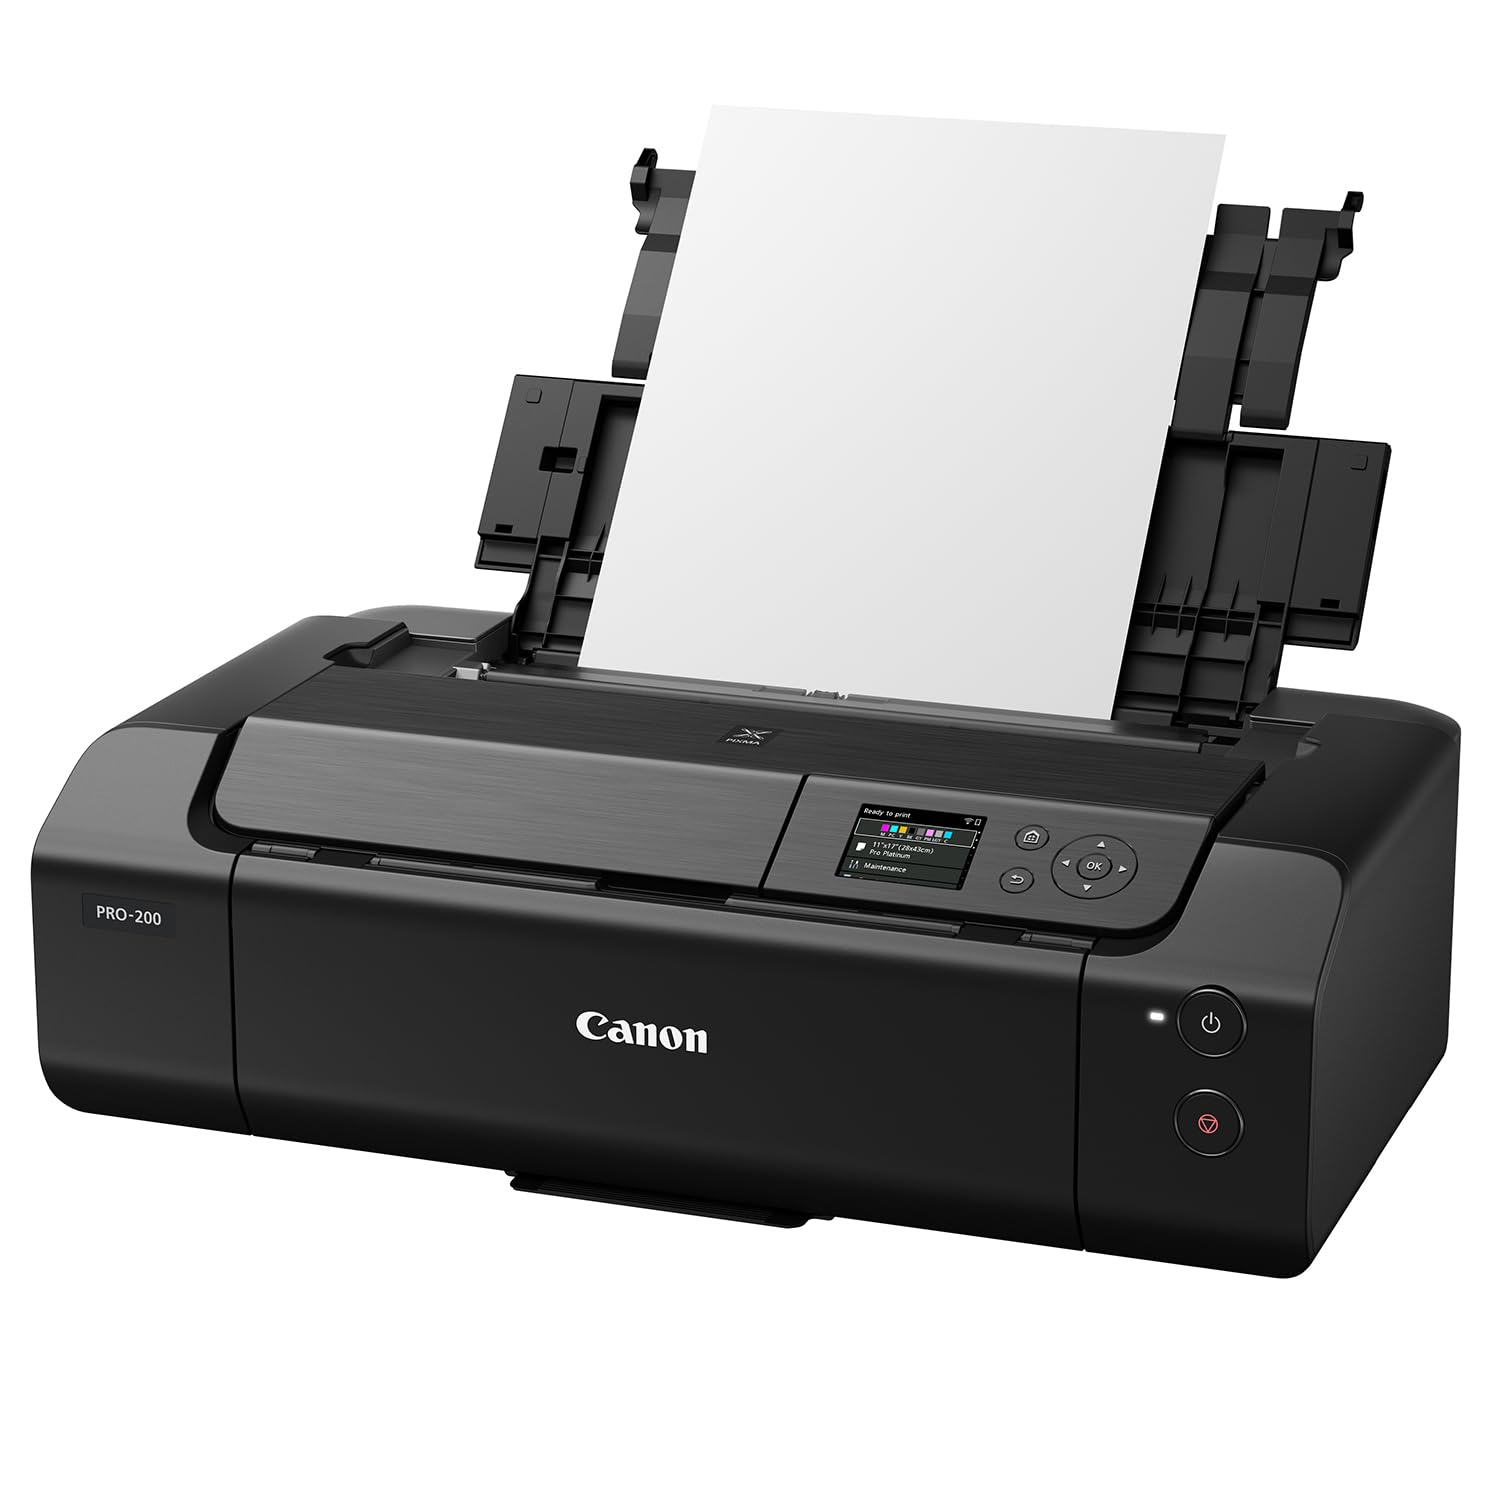 Canon PIXMA PRO-200 Wireless Professional Color Photo Printer, Prints up to 13